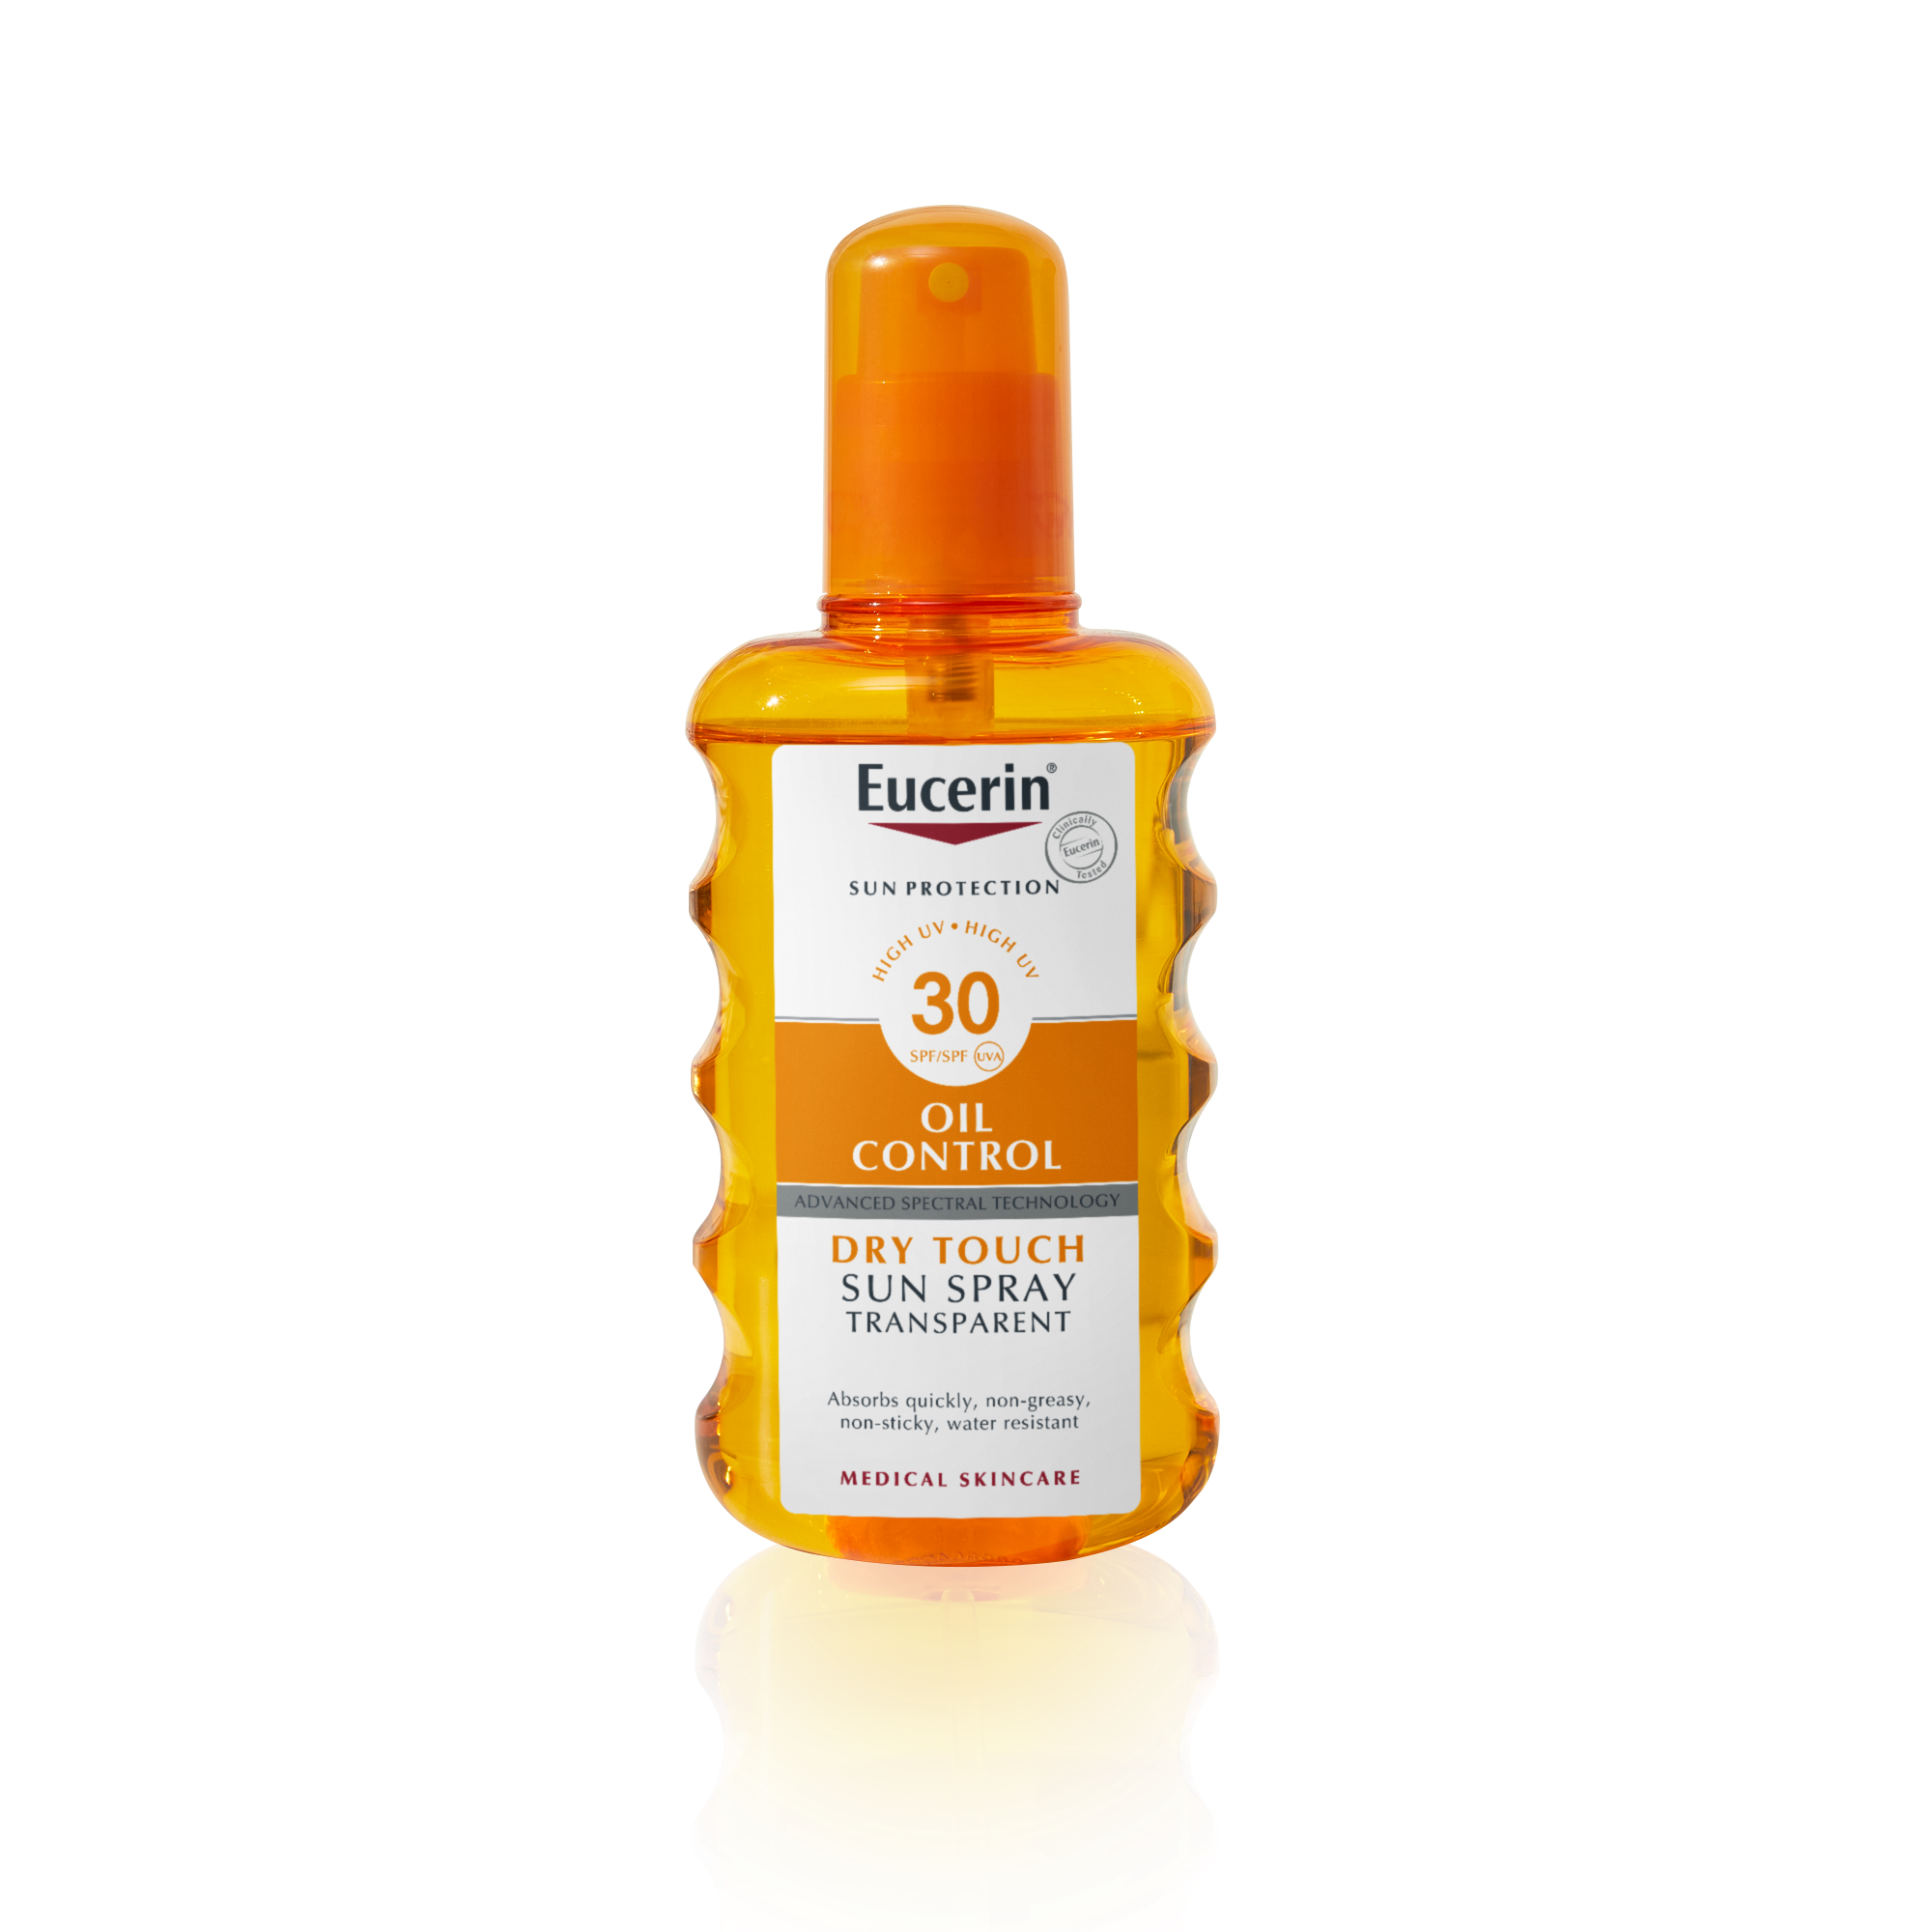 Eucerin Sun Spray Transparent Sensitive Protect SPF 30 sauļošanās aizsargaerosols jutīgai ādai